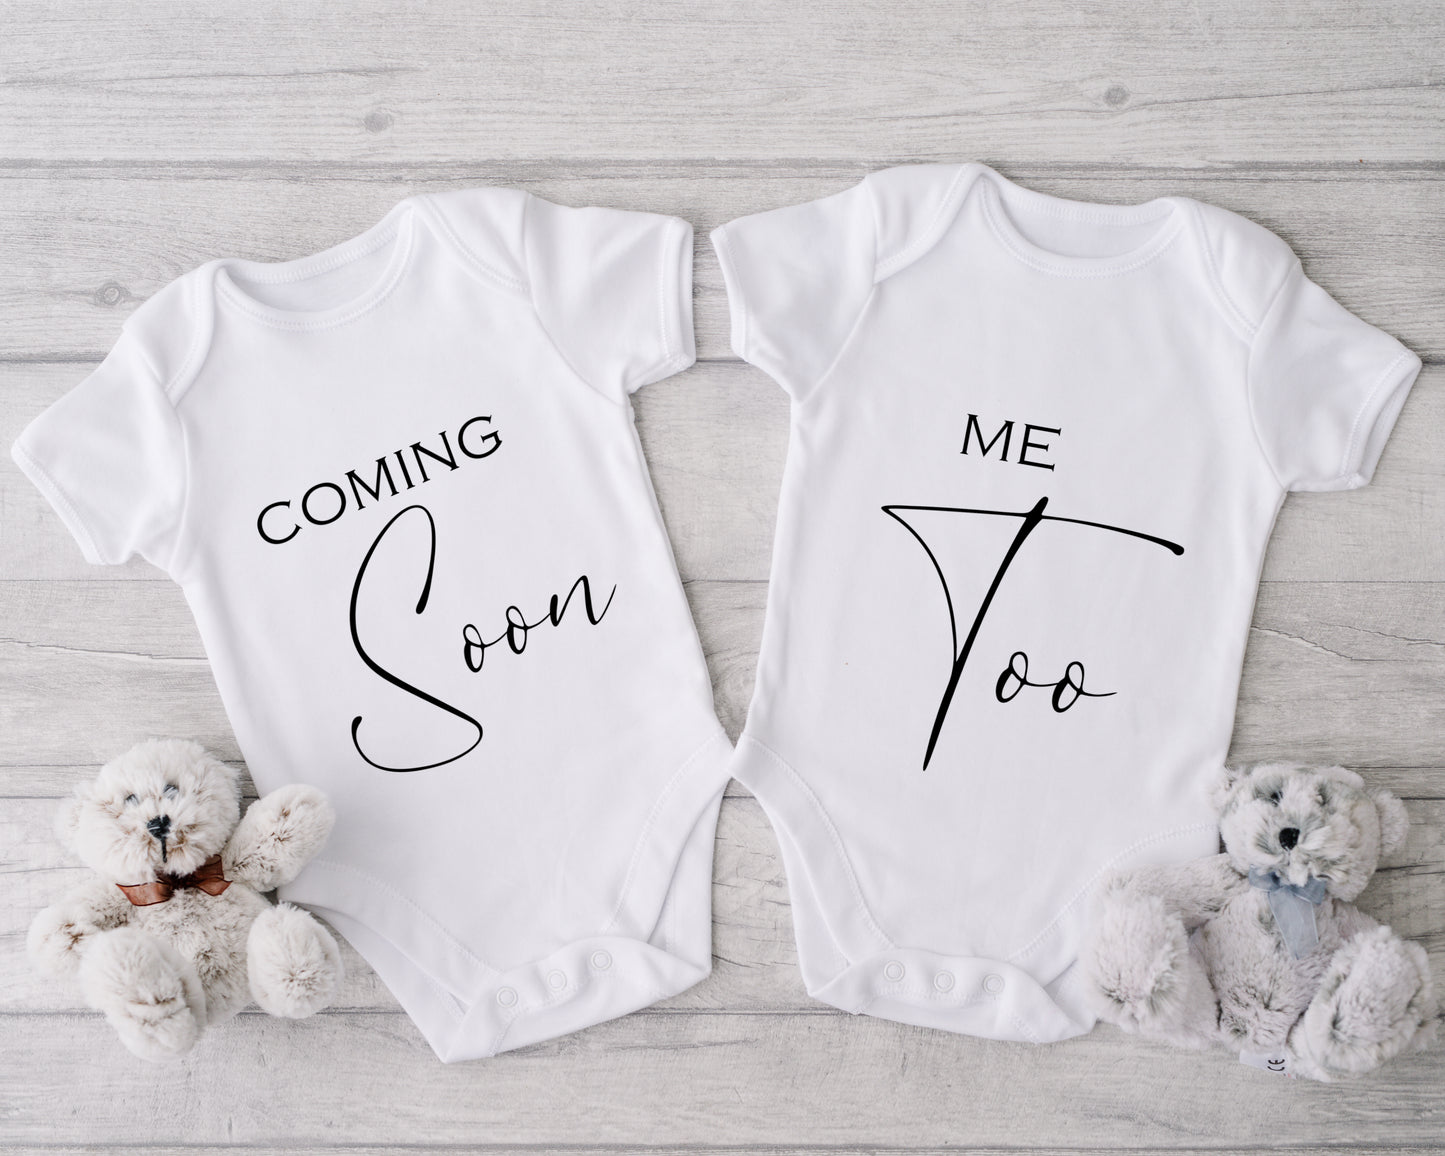 Twin Baby Vests - 'Coming soon' & 'Me Too'